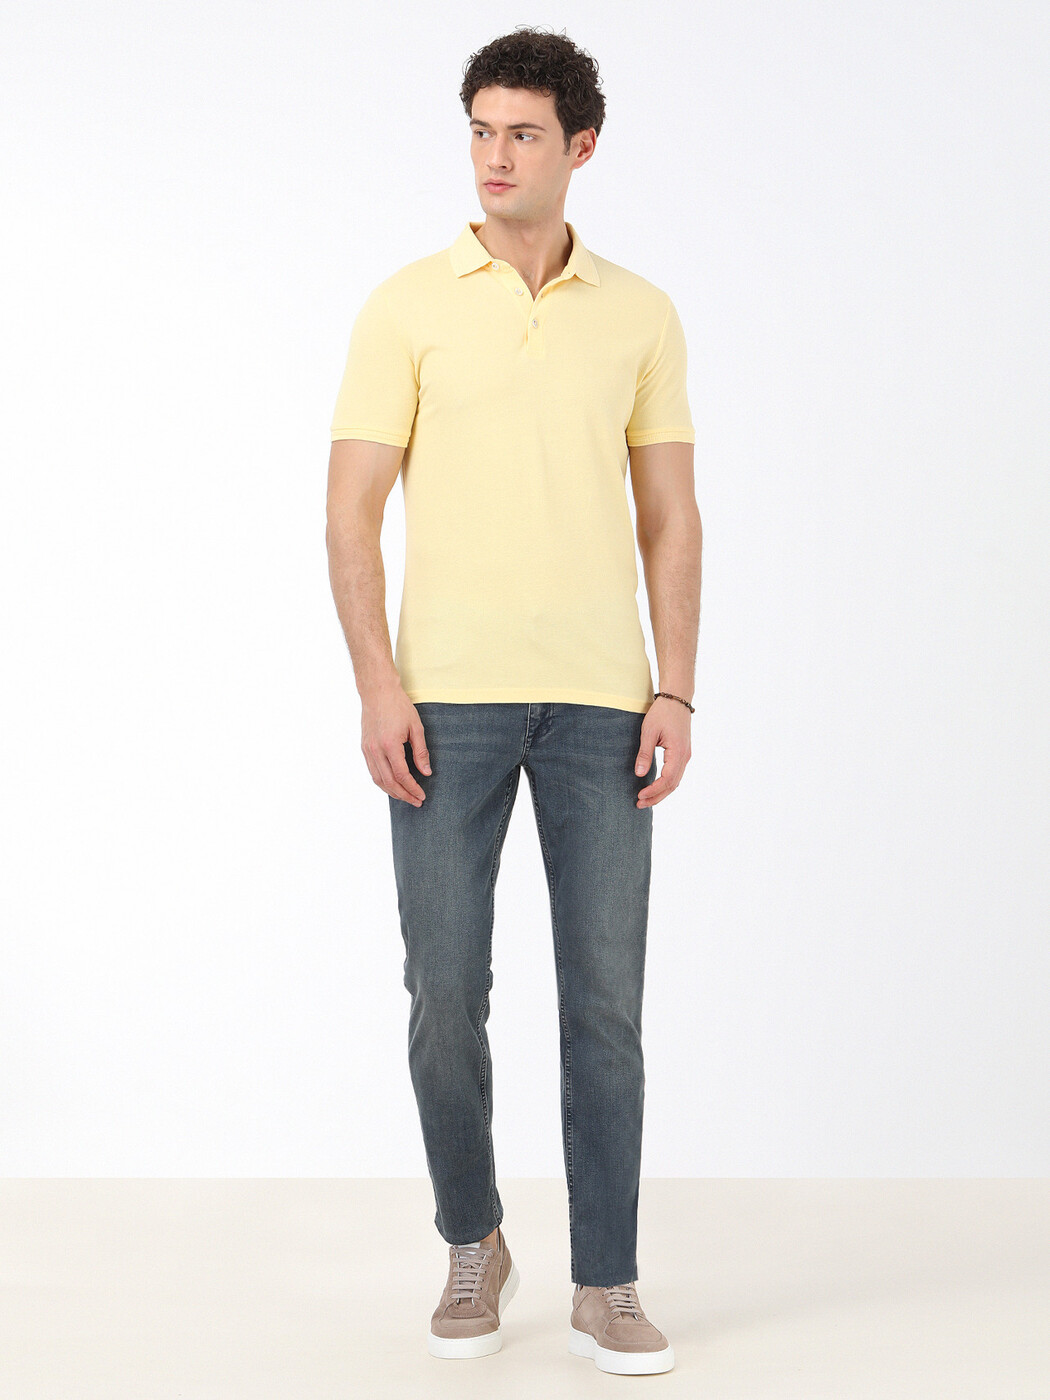 KİP - Sarı Düz Polo Yaka %100 Pamuk T-Shirt (1)